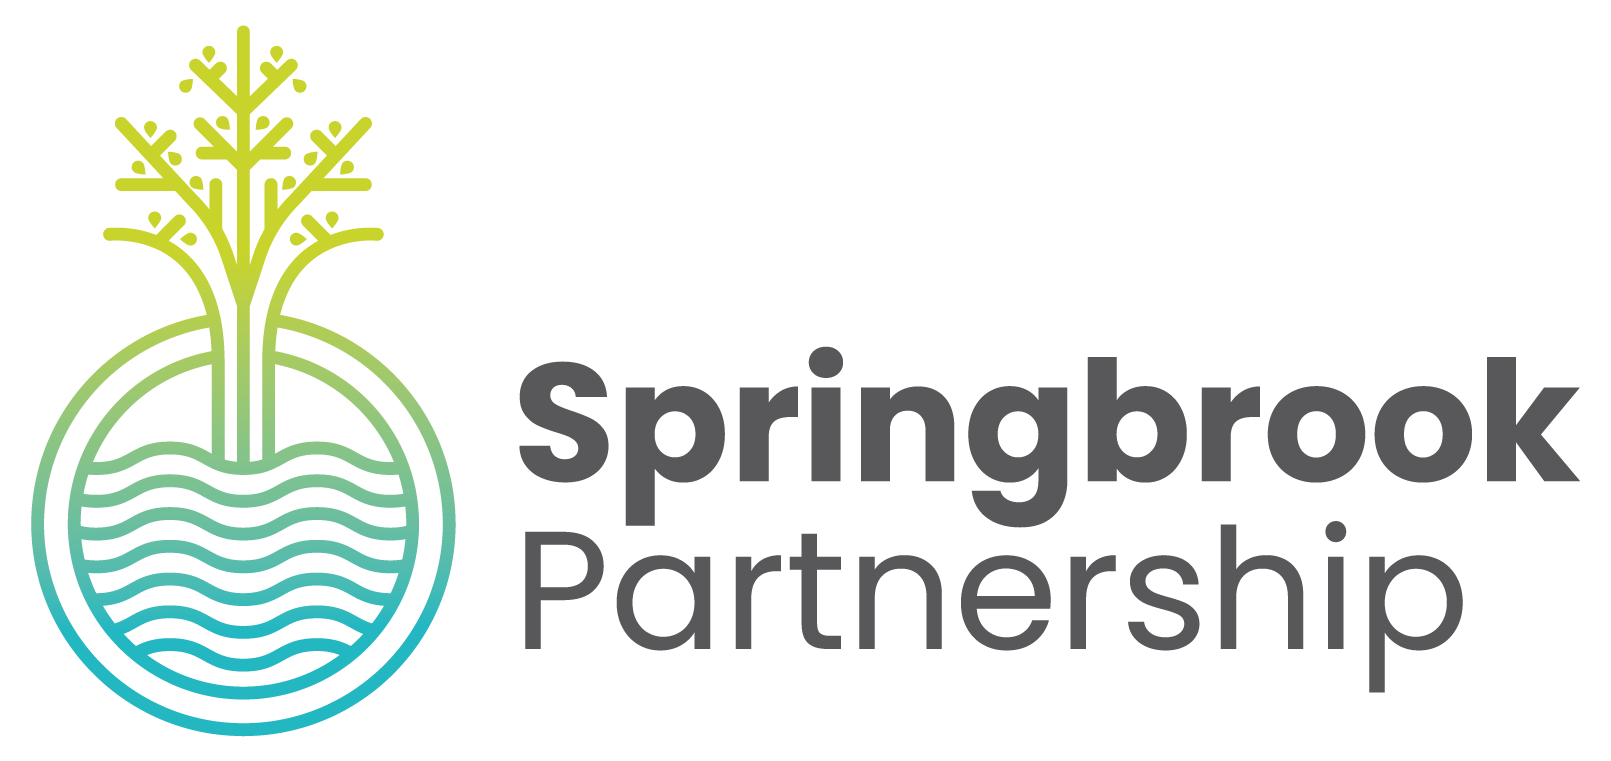 Springbrook Partnership